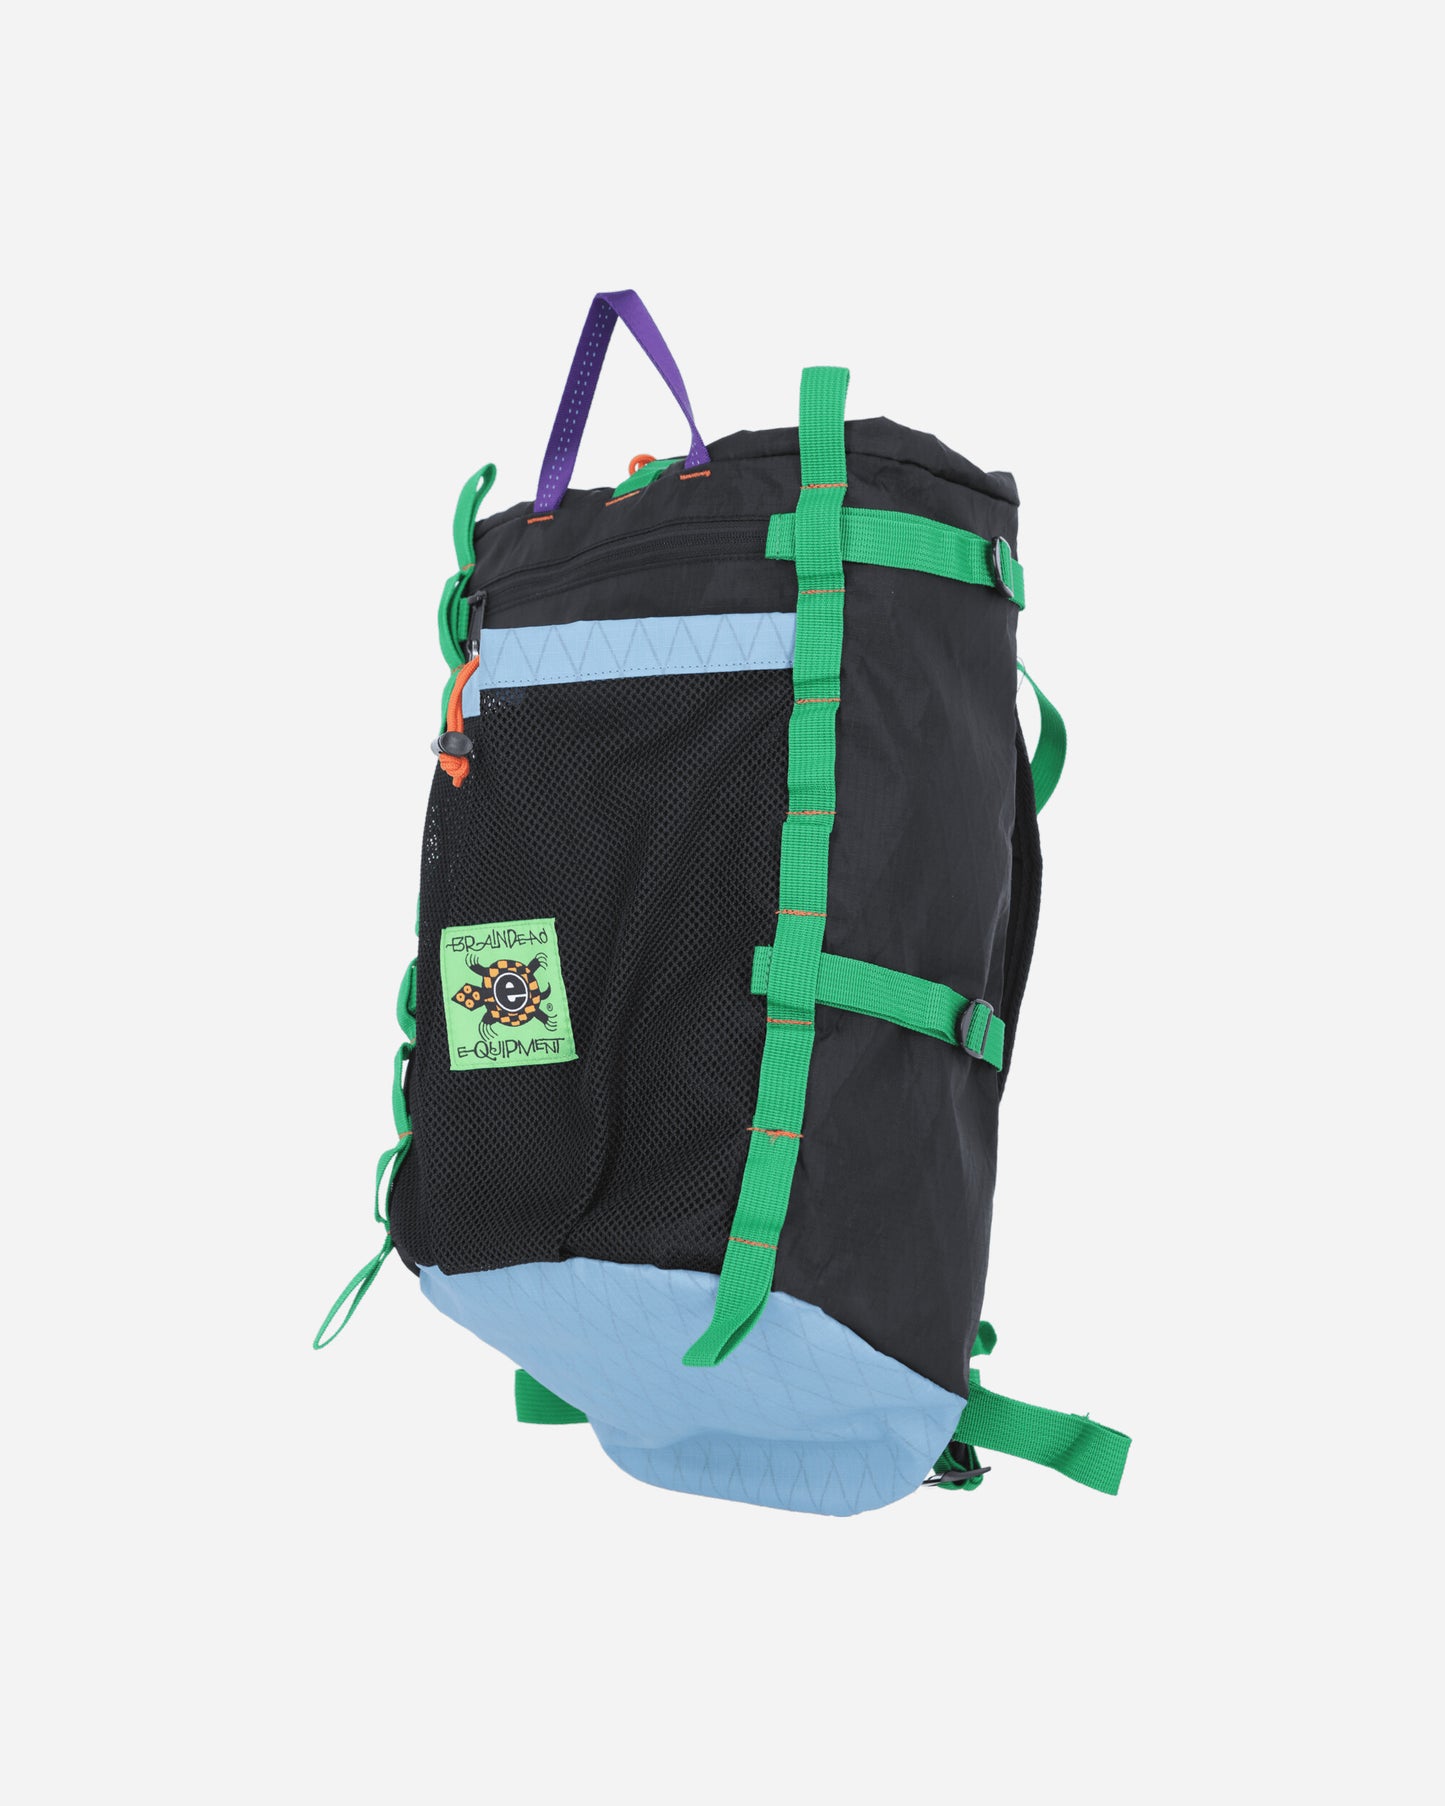 Brain Dead Equipment Climbing Backpack Black Bags and Backpacks Backpacks A00003764BK BLACK